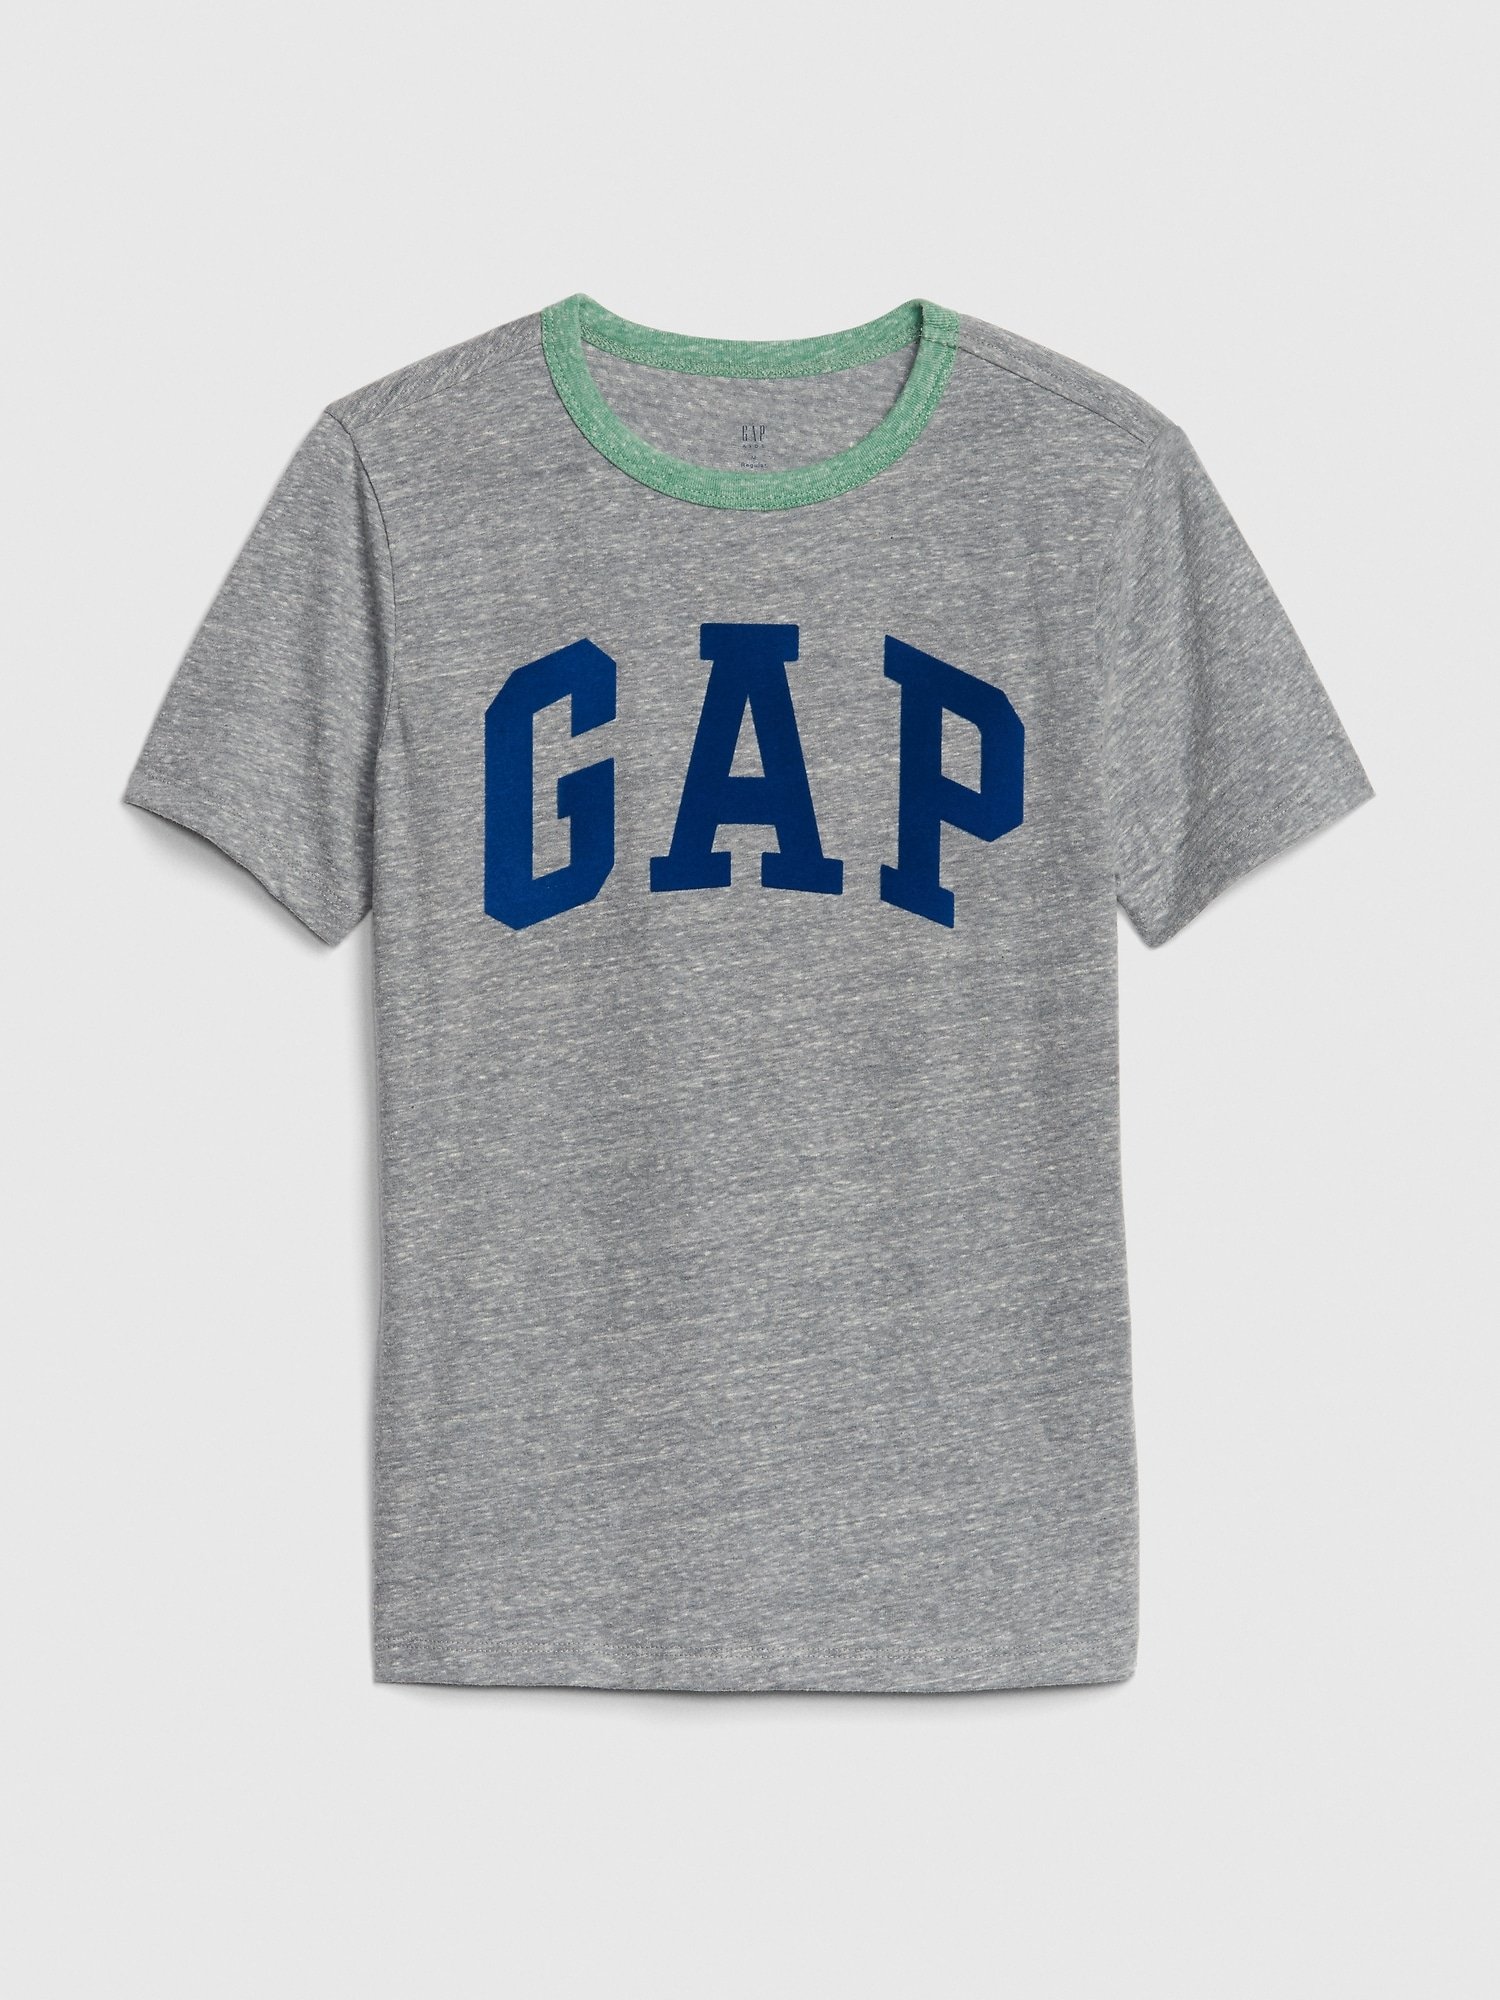 Gap Logo T-shirt product image